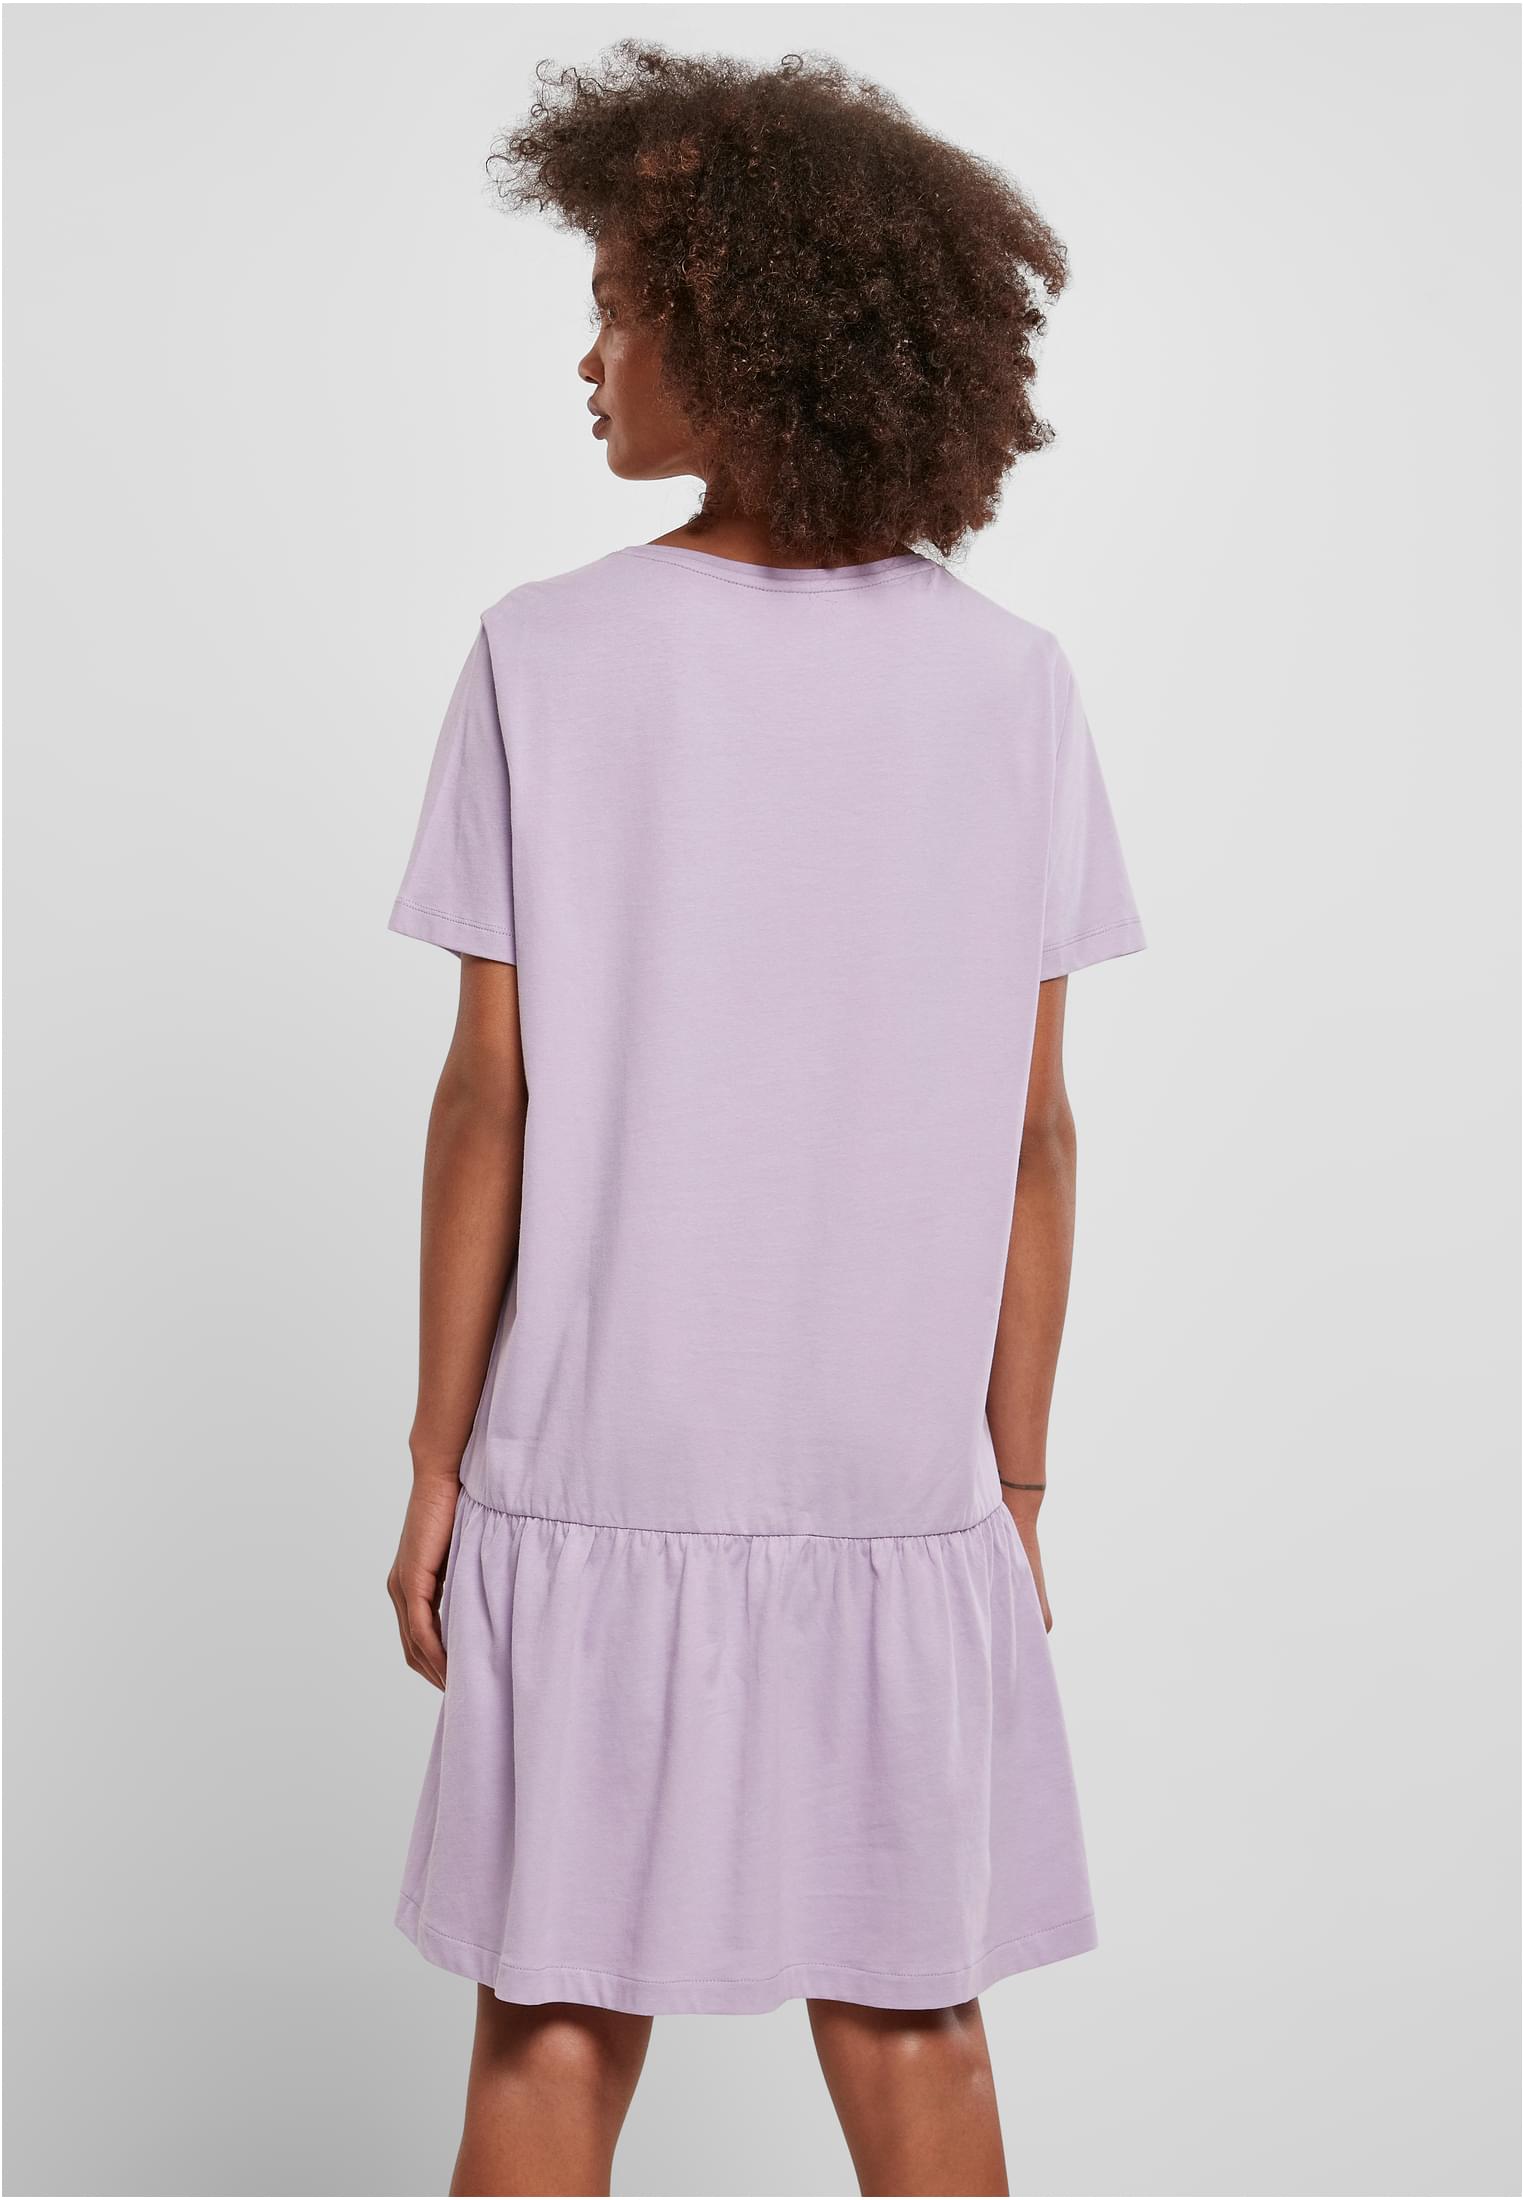 Frauen Ladies Valance Tee Dress in Farbe lilac